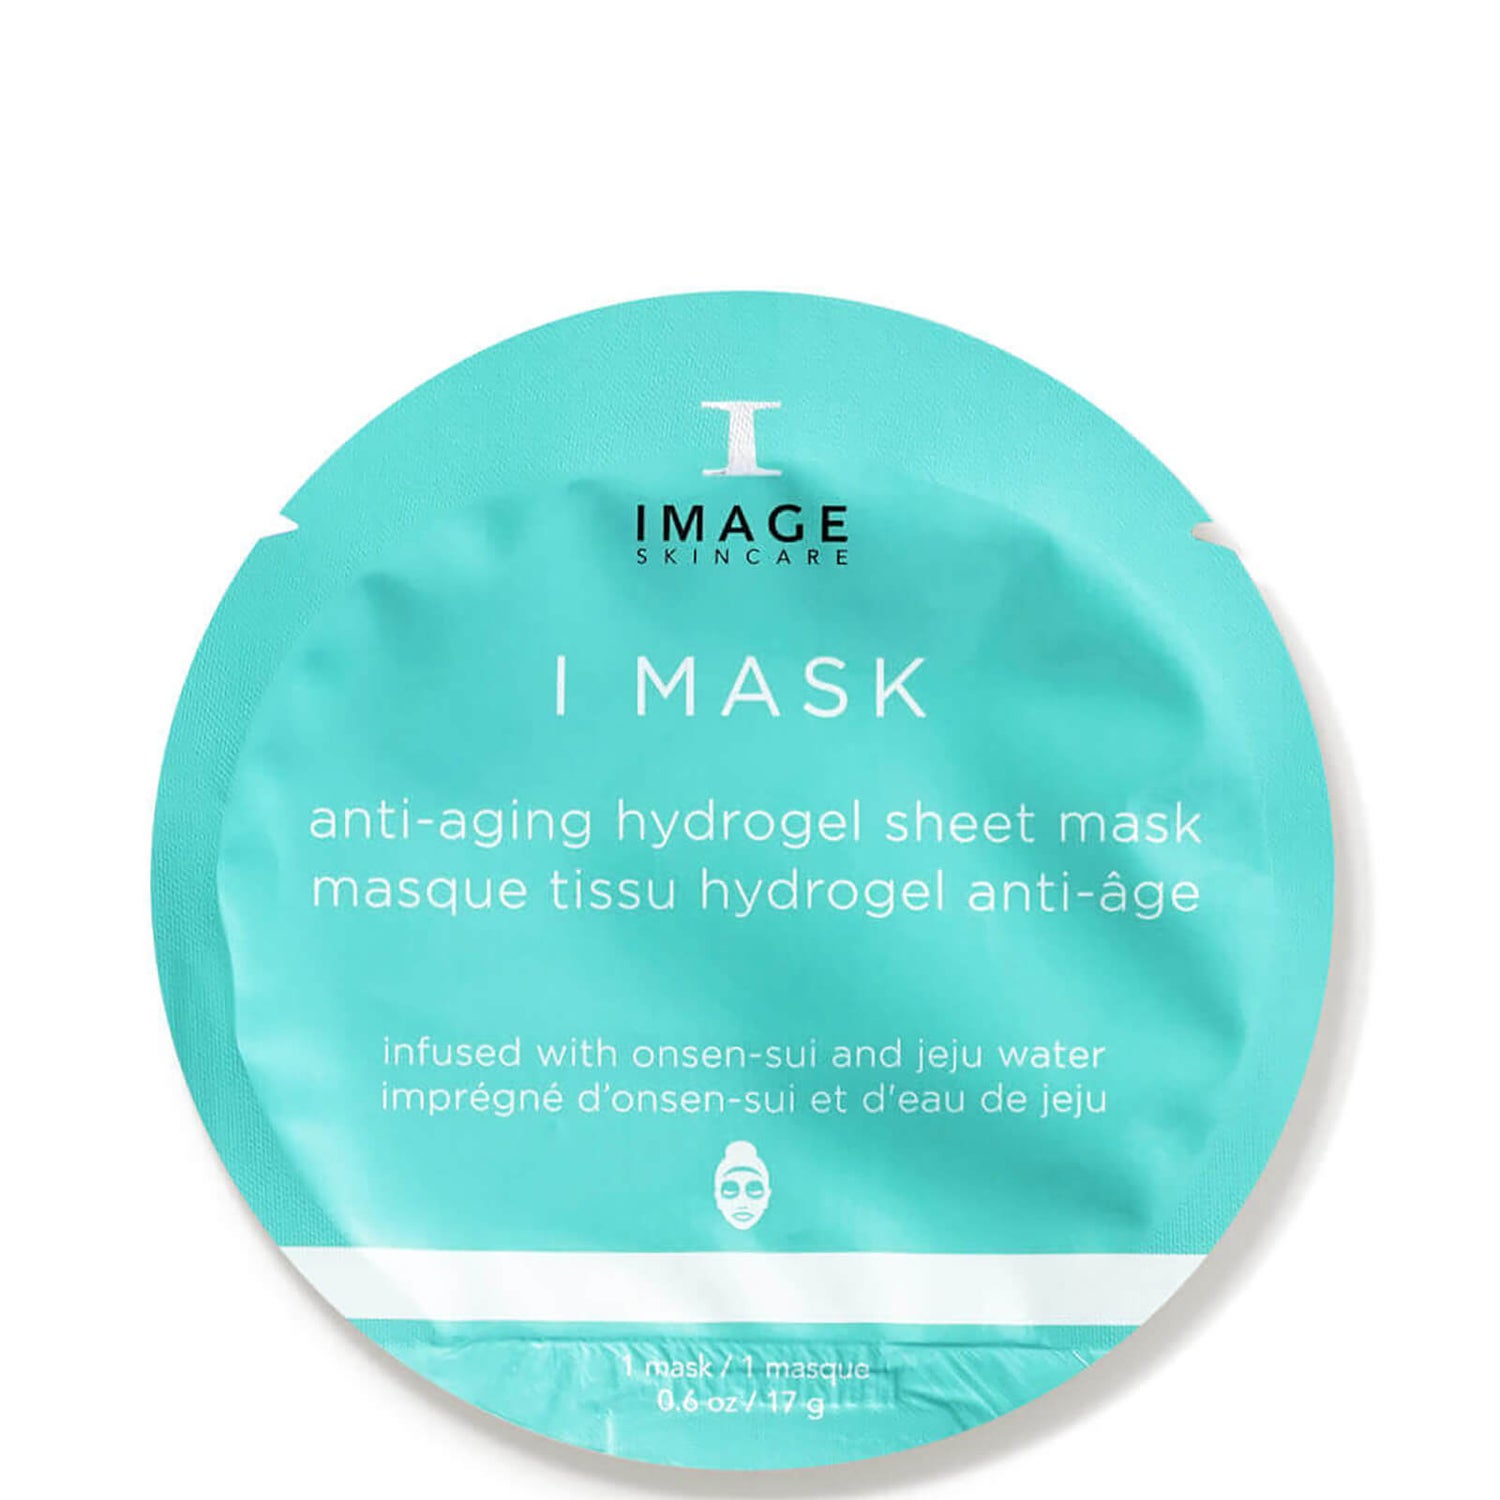 Oraal gastheer kassa IMAGE Skincare I MASK Anti-Aging Hydrogel Sheet Mask (5 count) - Dermstore